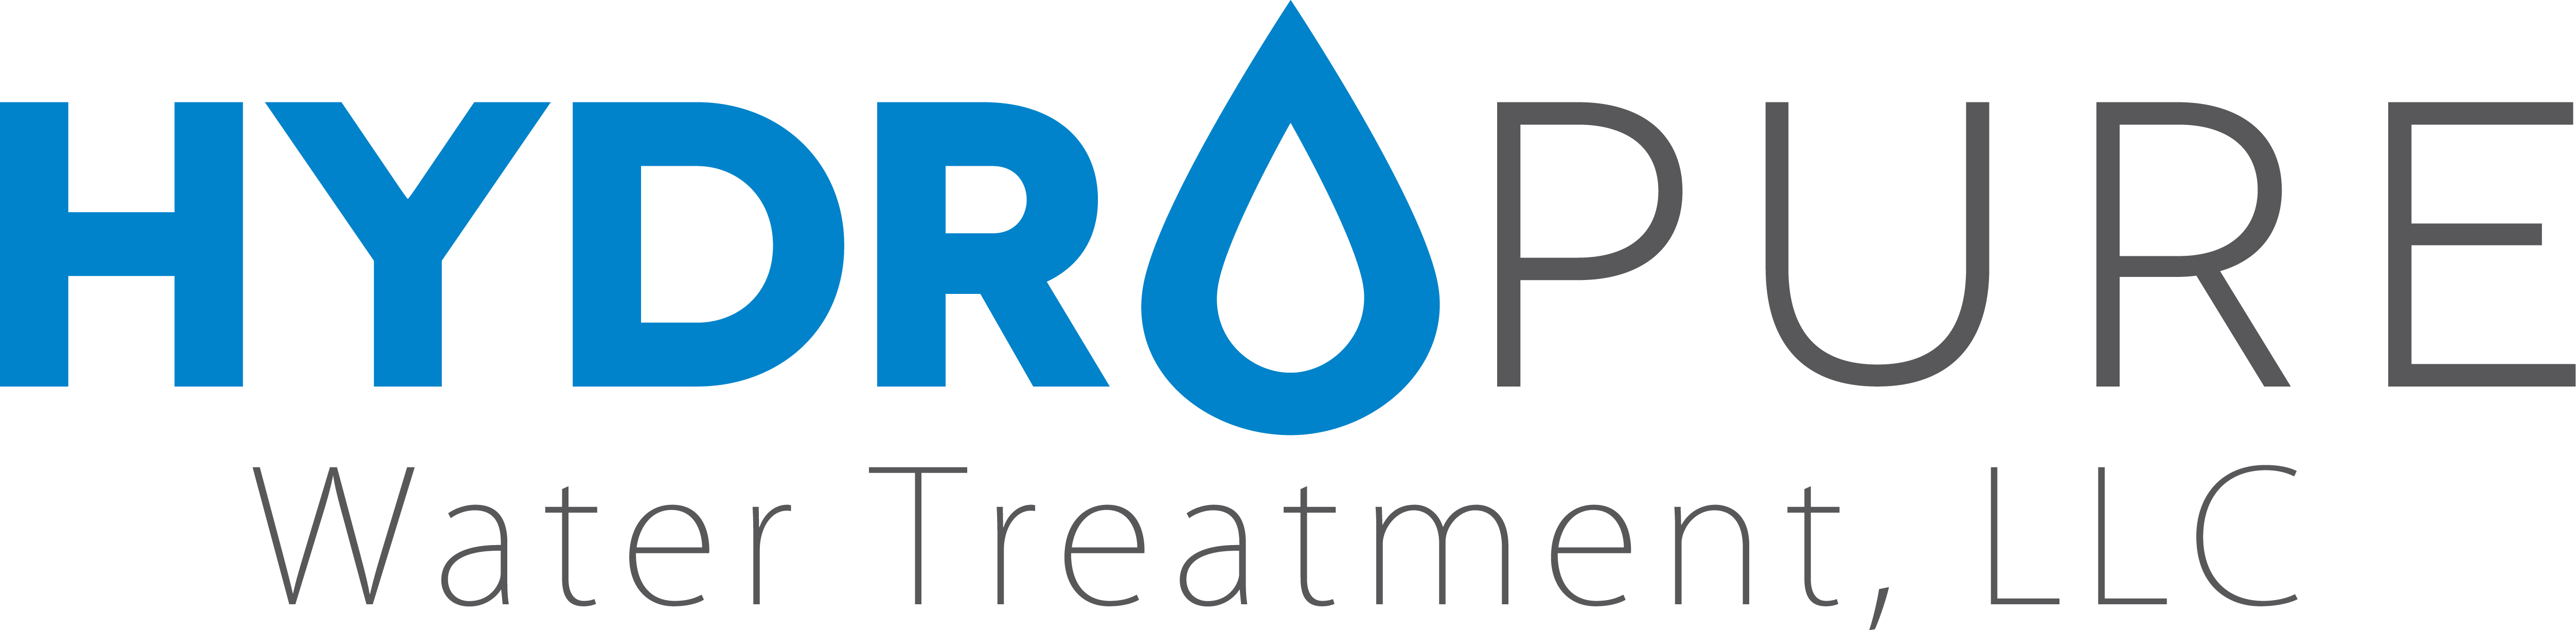 Hydro-pure Water Treatment, Llc